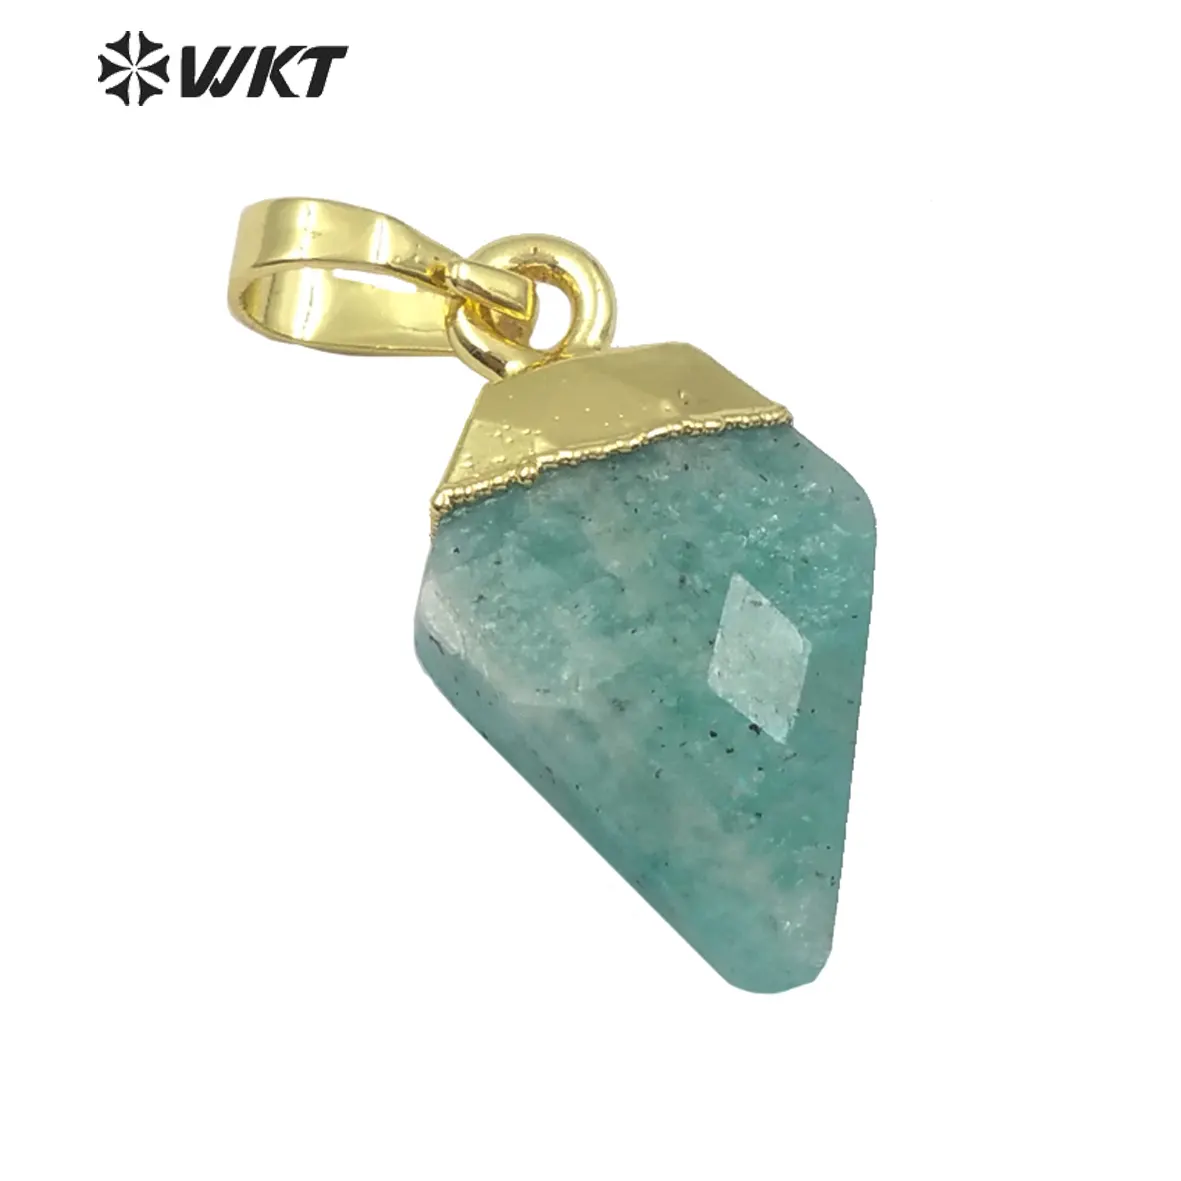 WT-P1401 Toptan taş kolye ile 24 k altın elektroliz çok renkli mini kristal kolye